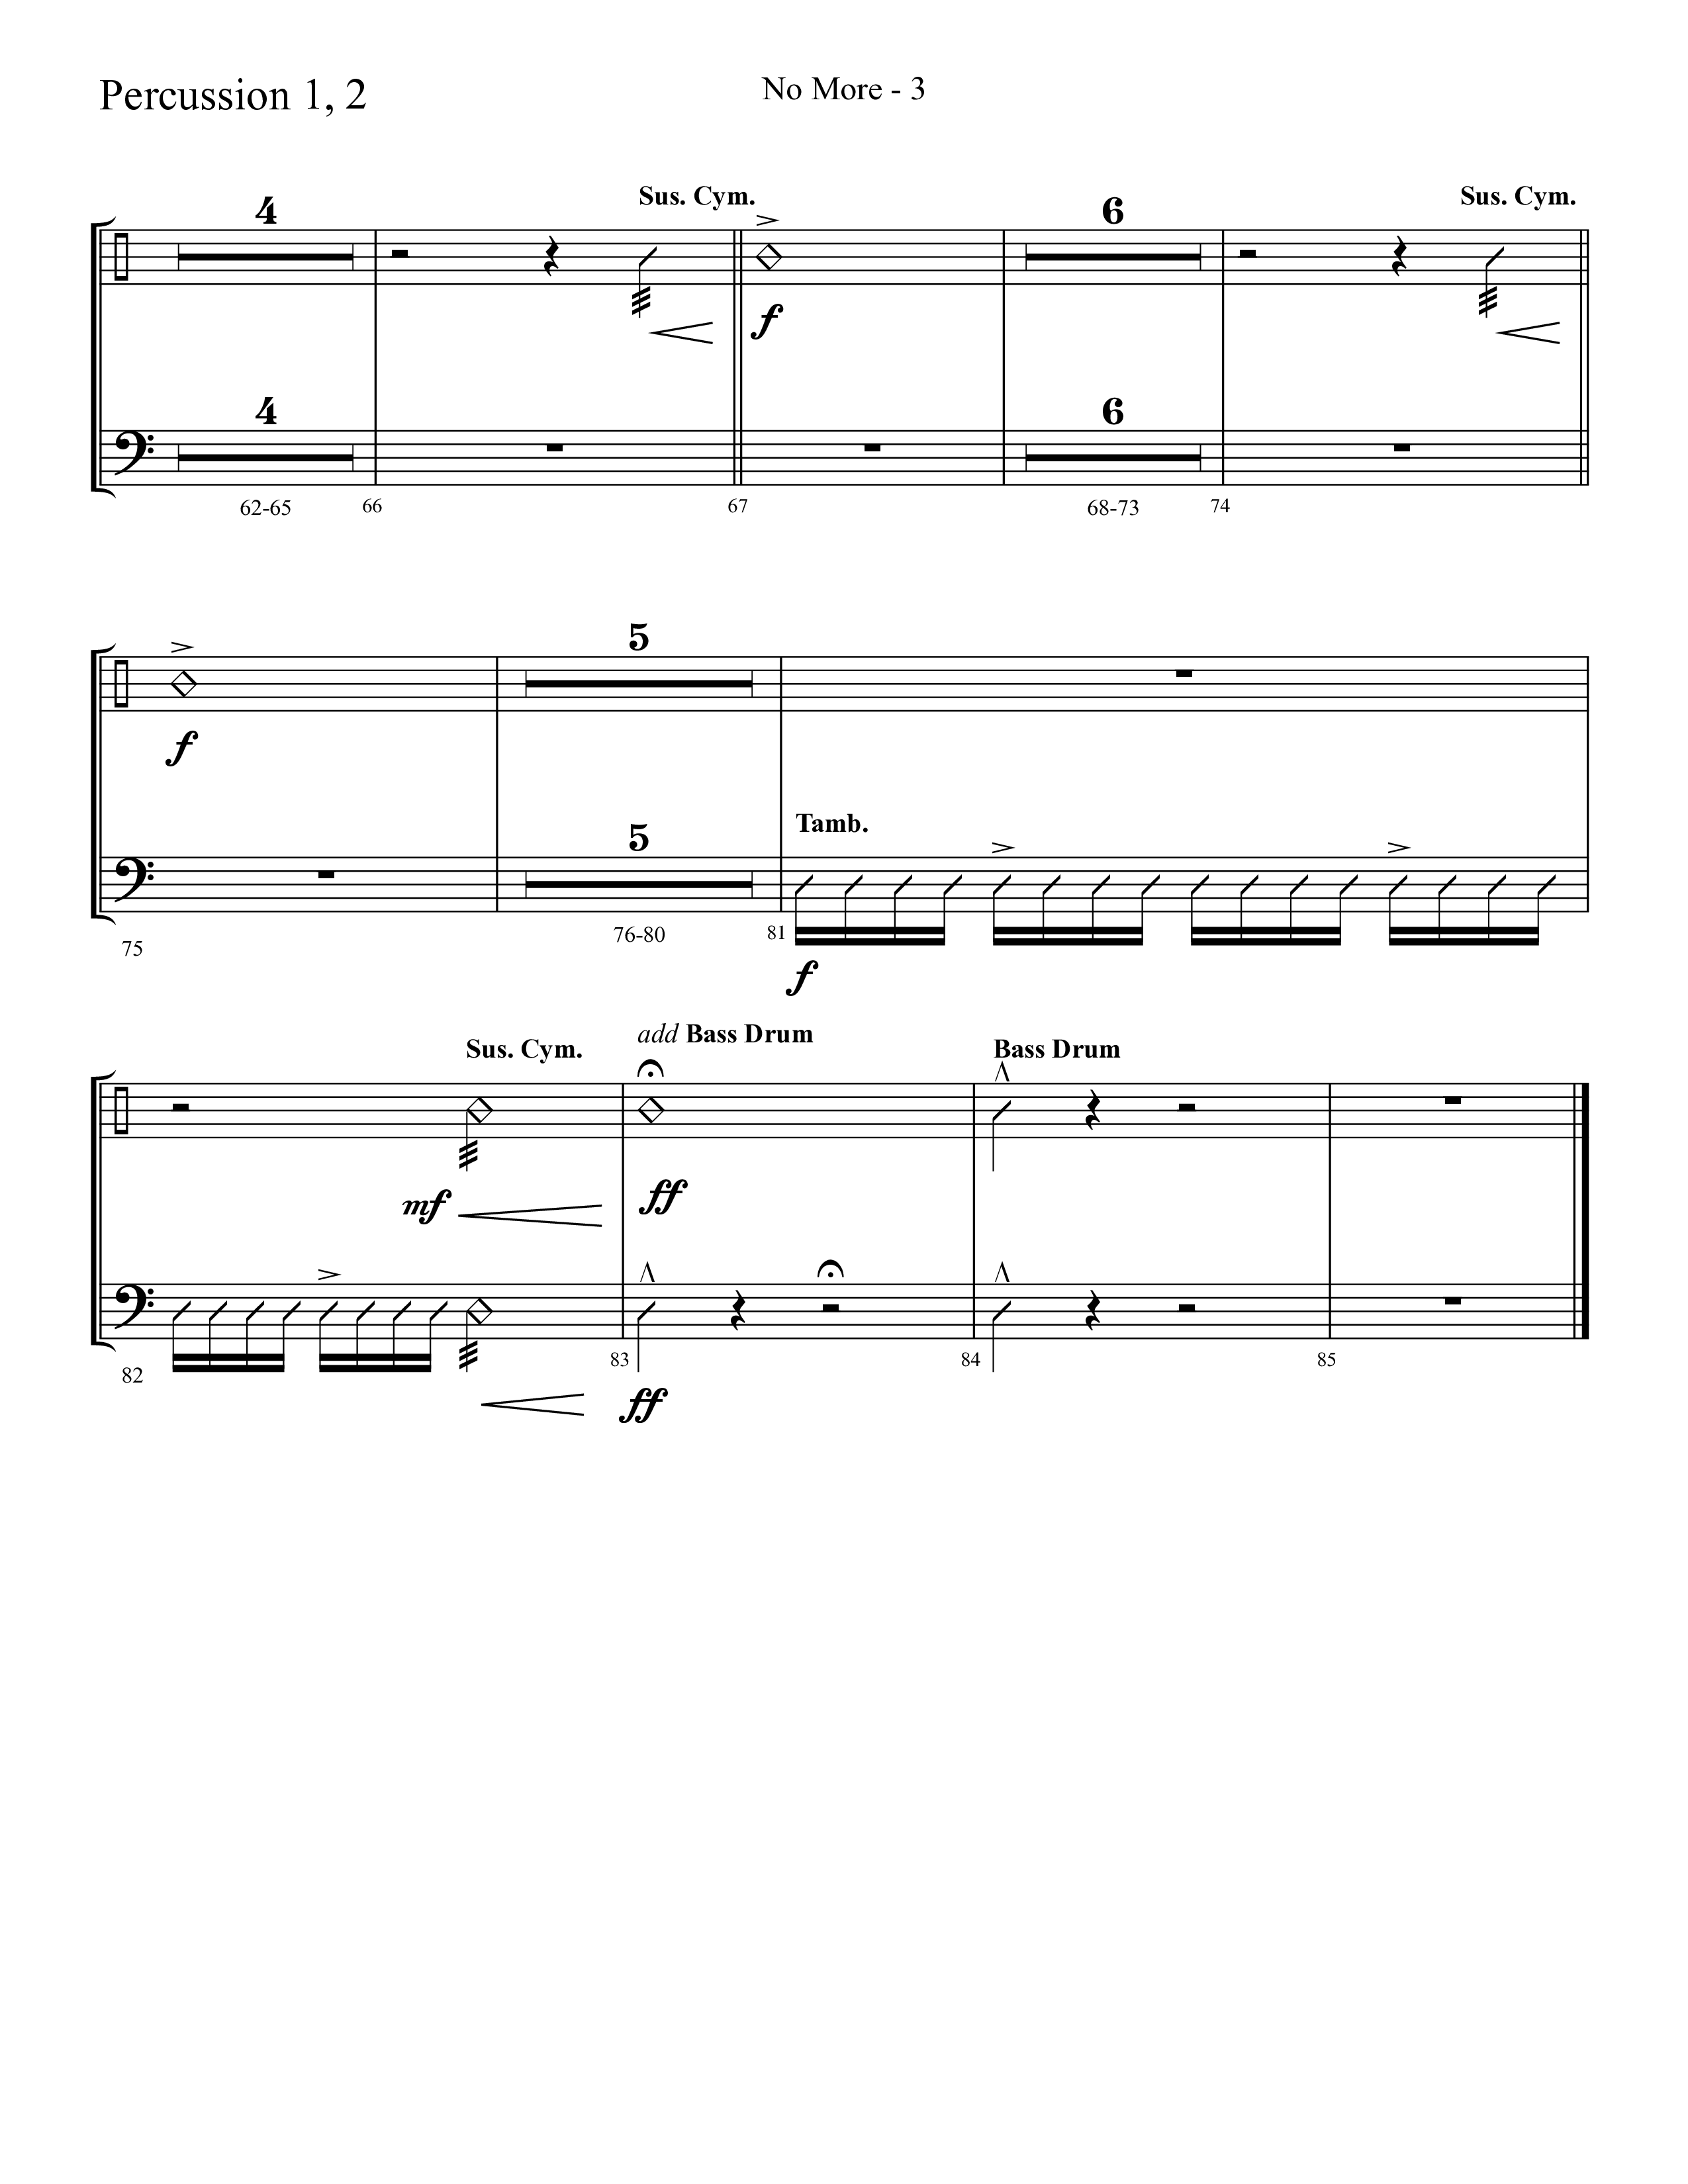 No More (Choral Anthem SATB) Percussion 1/2 (Lifeway Choral / Arr. Cliff Duren)